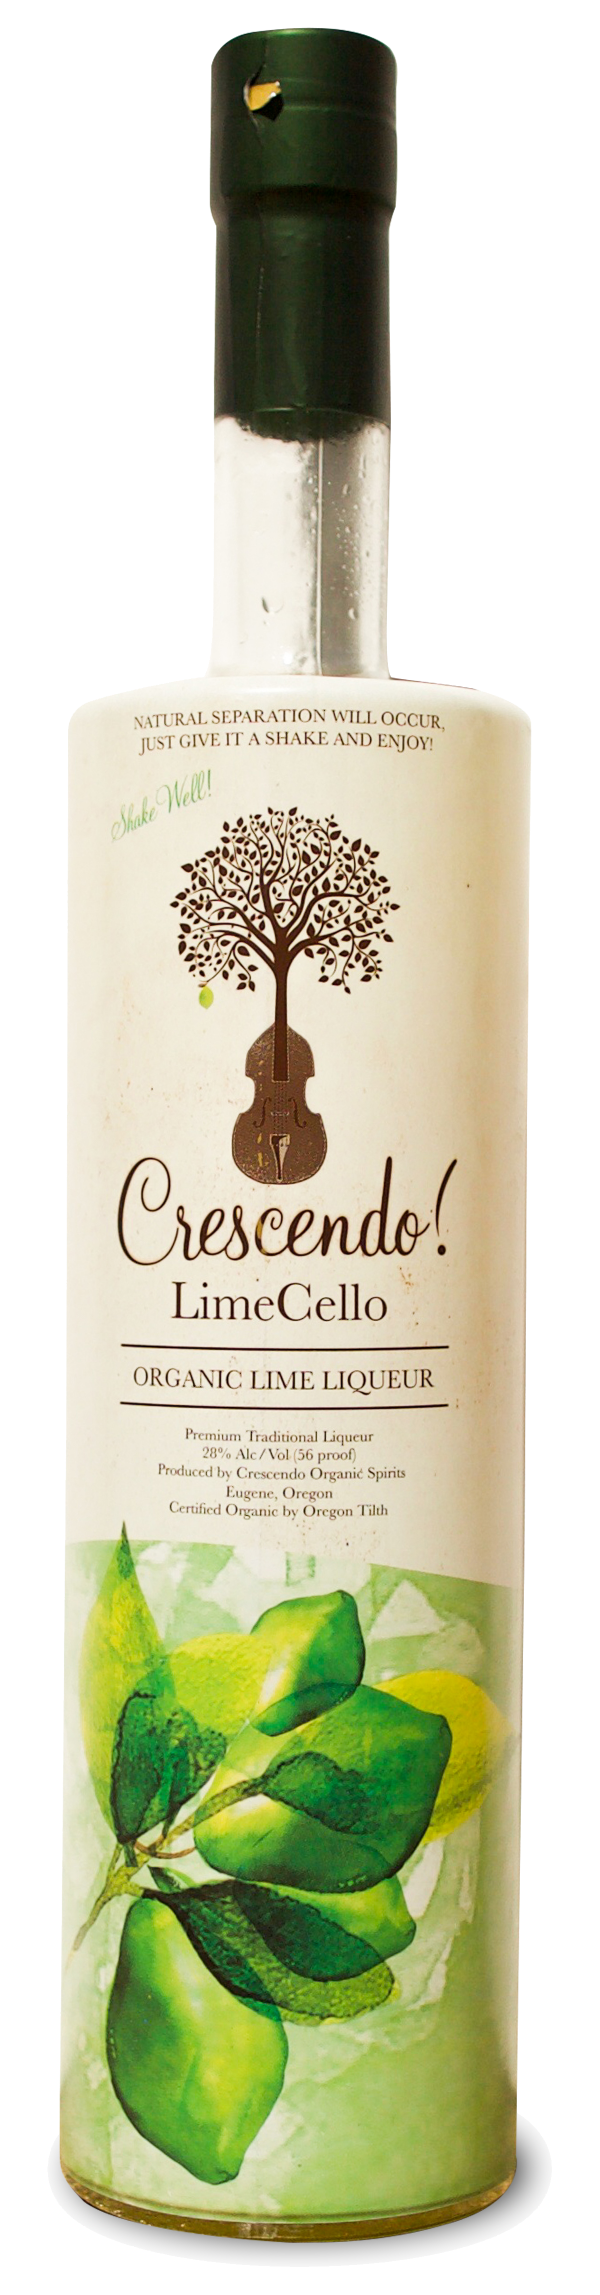 Crescendo LimeCello Organic Lime Liqueur